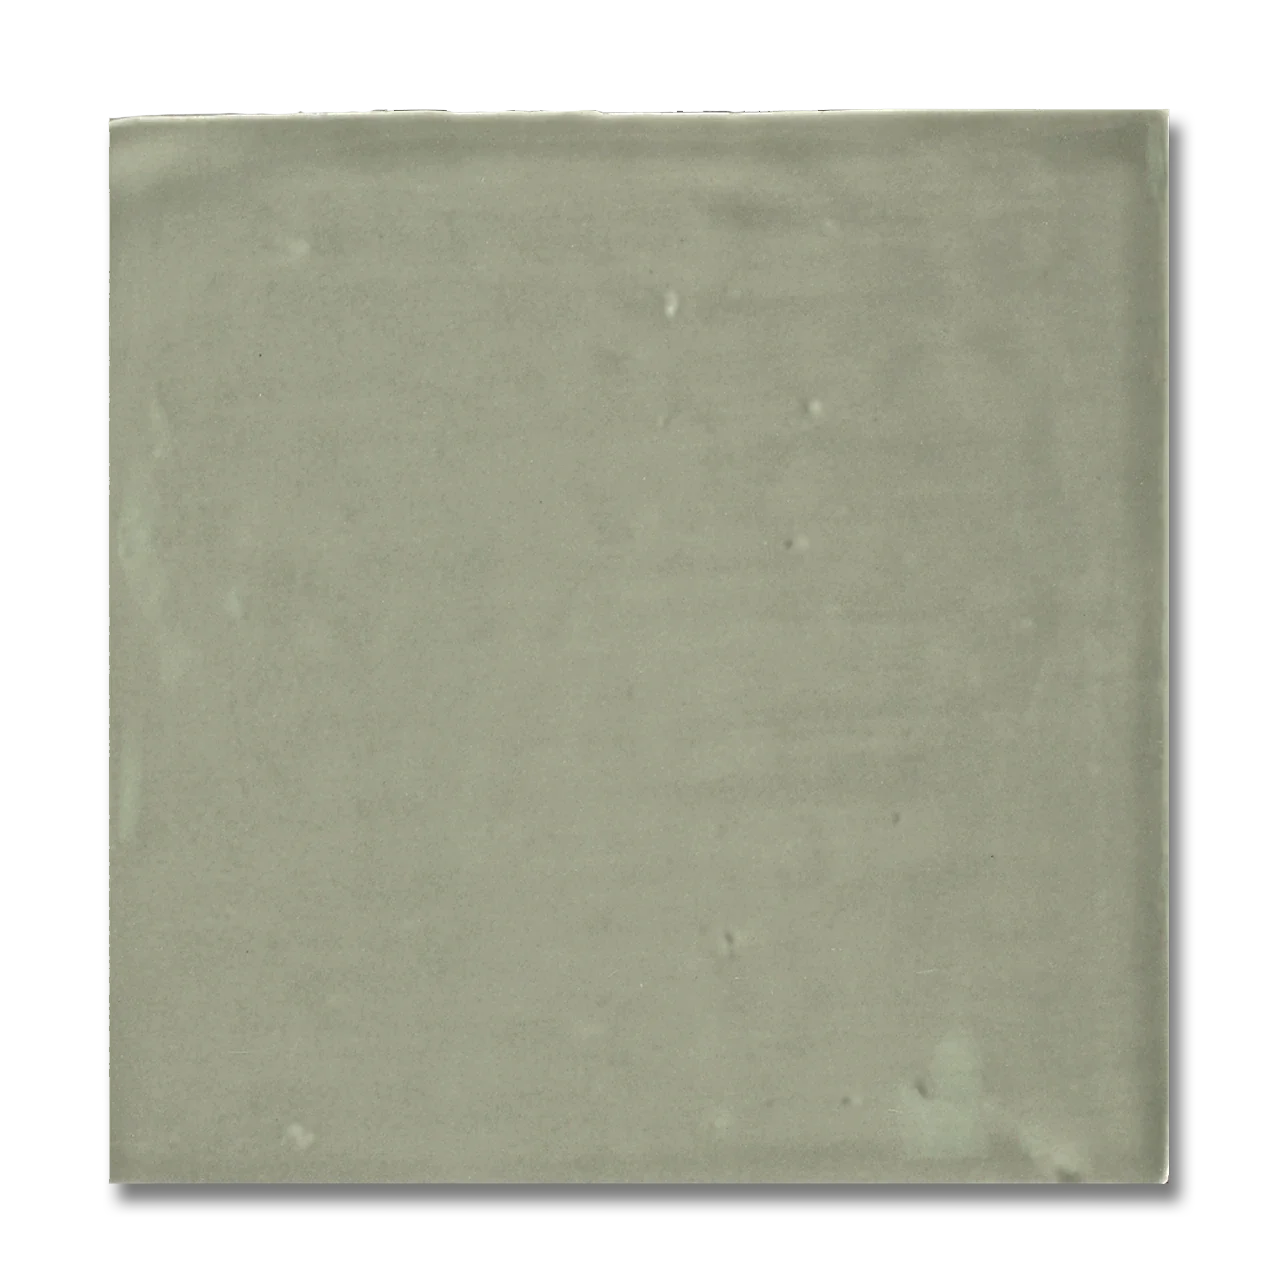 St. Topez Glazed Ceramic Wall Tile 5”x5” Verde